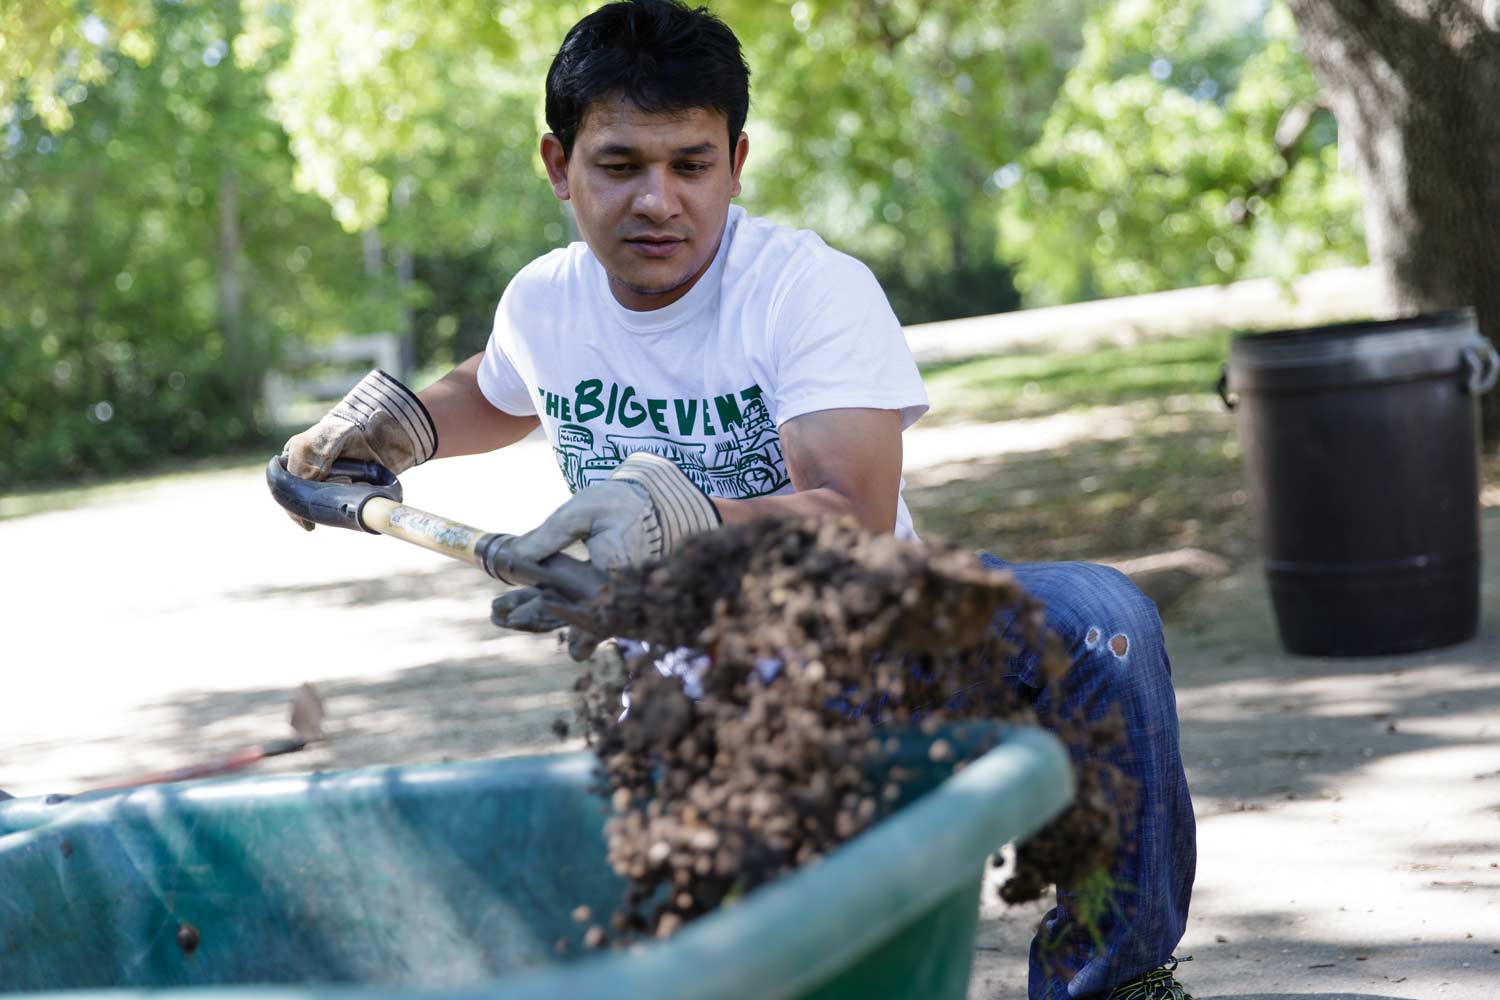 Student shovels dirt into a wheelbarrow for Big Event